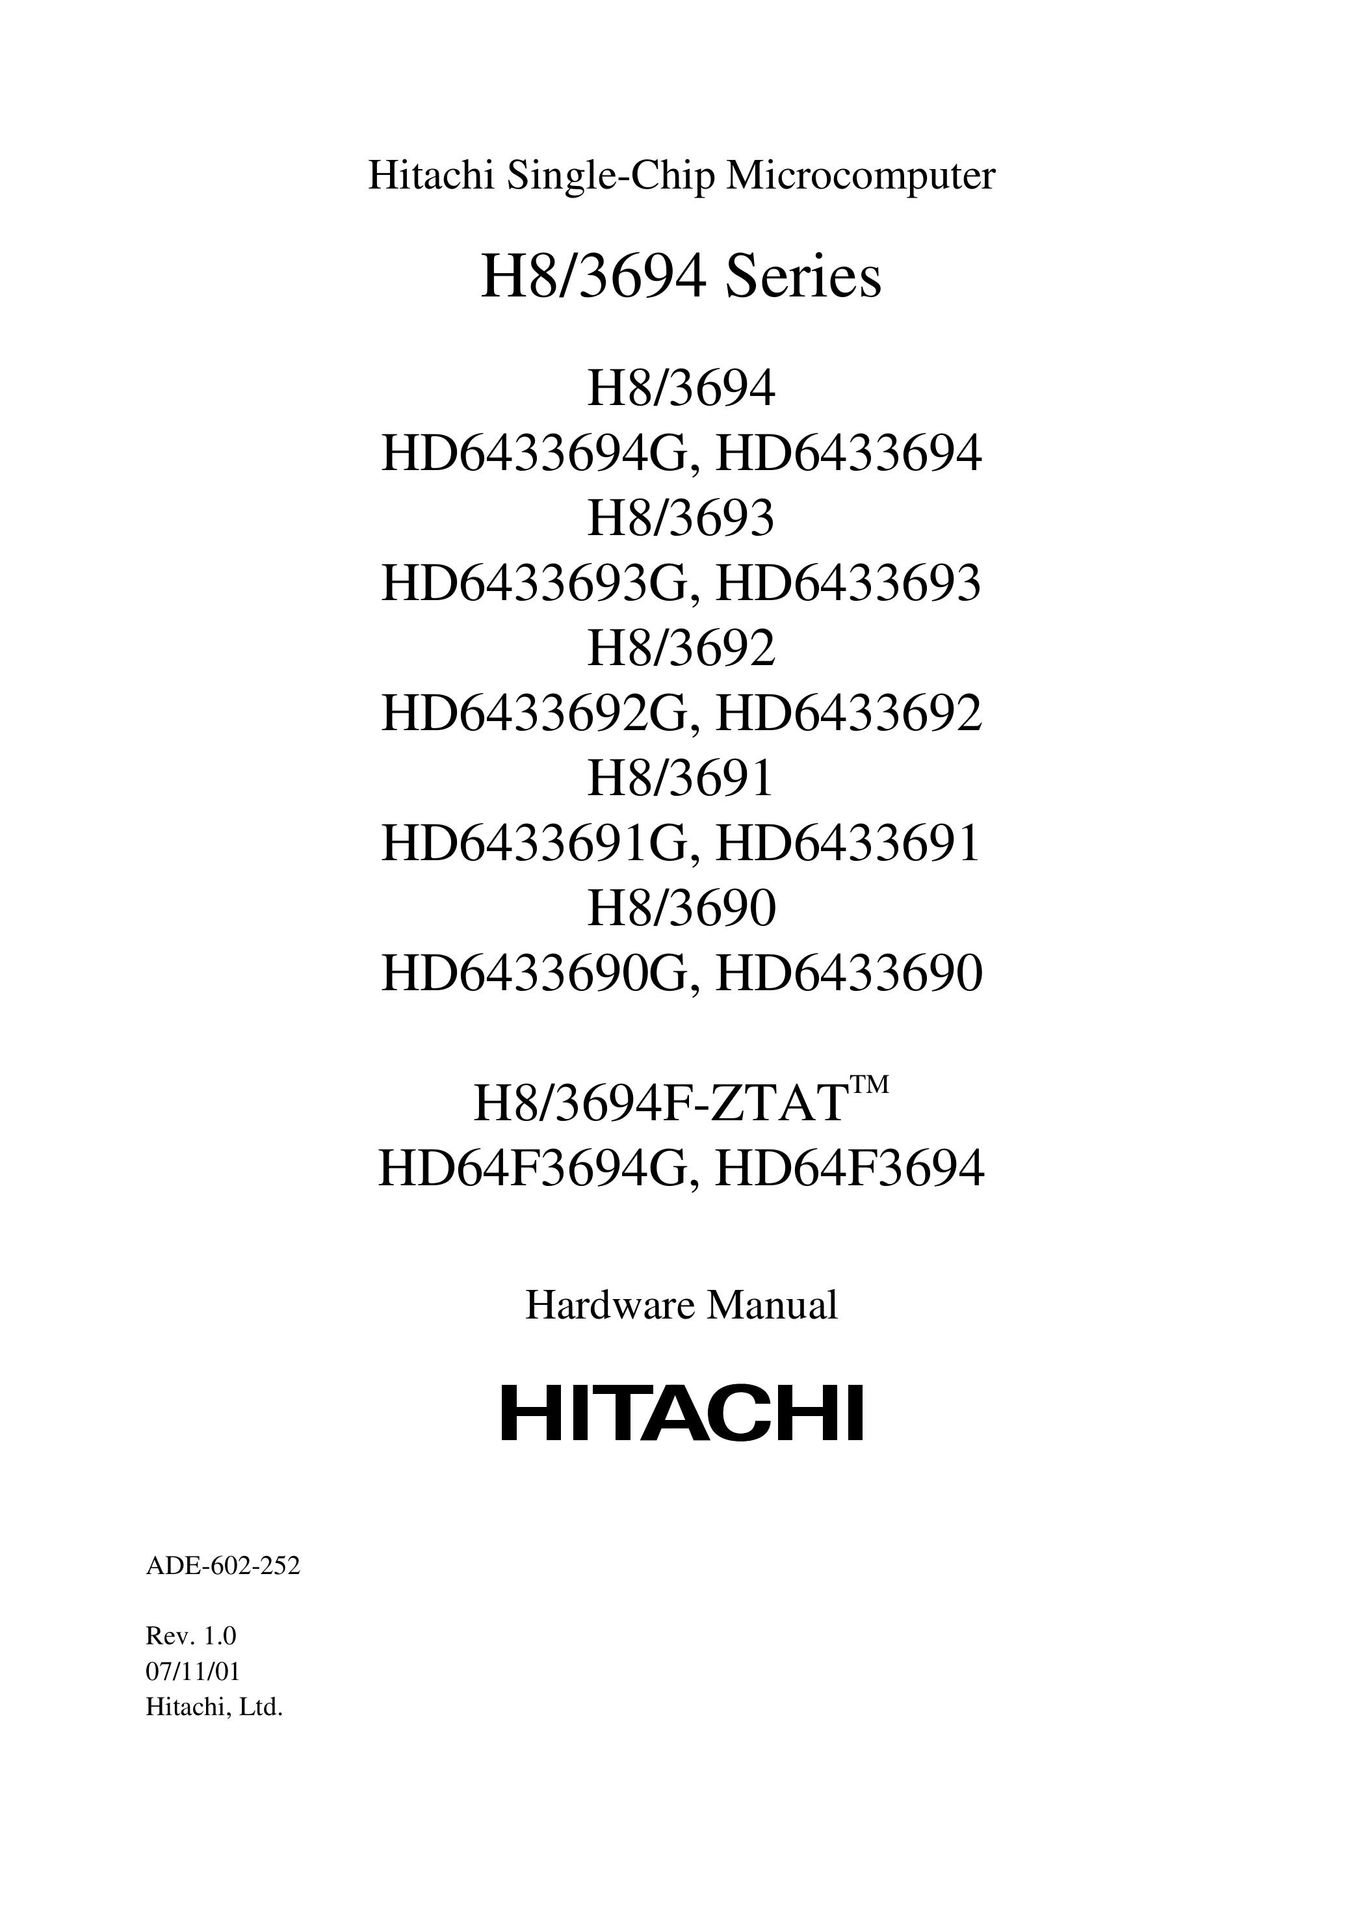 Hitachi HD6433694 TV Mount User Manual